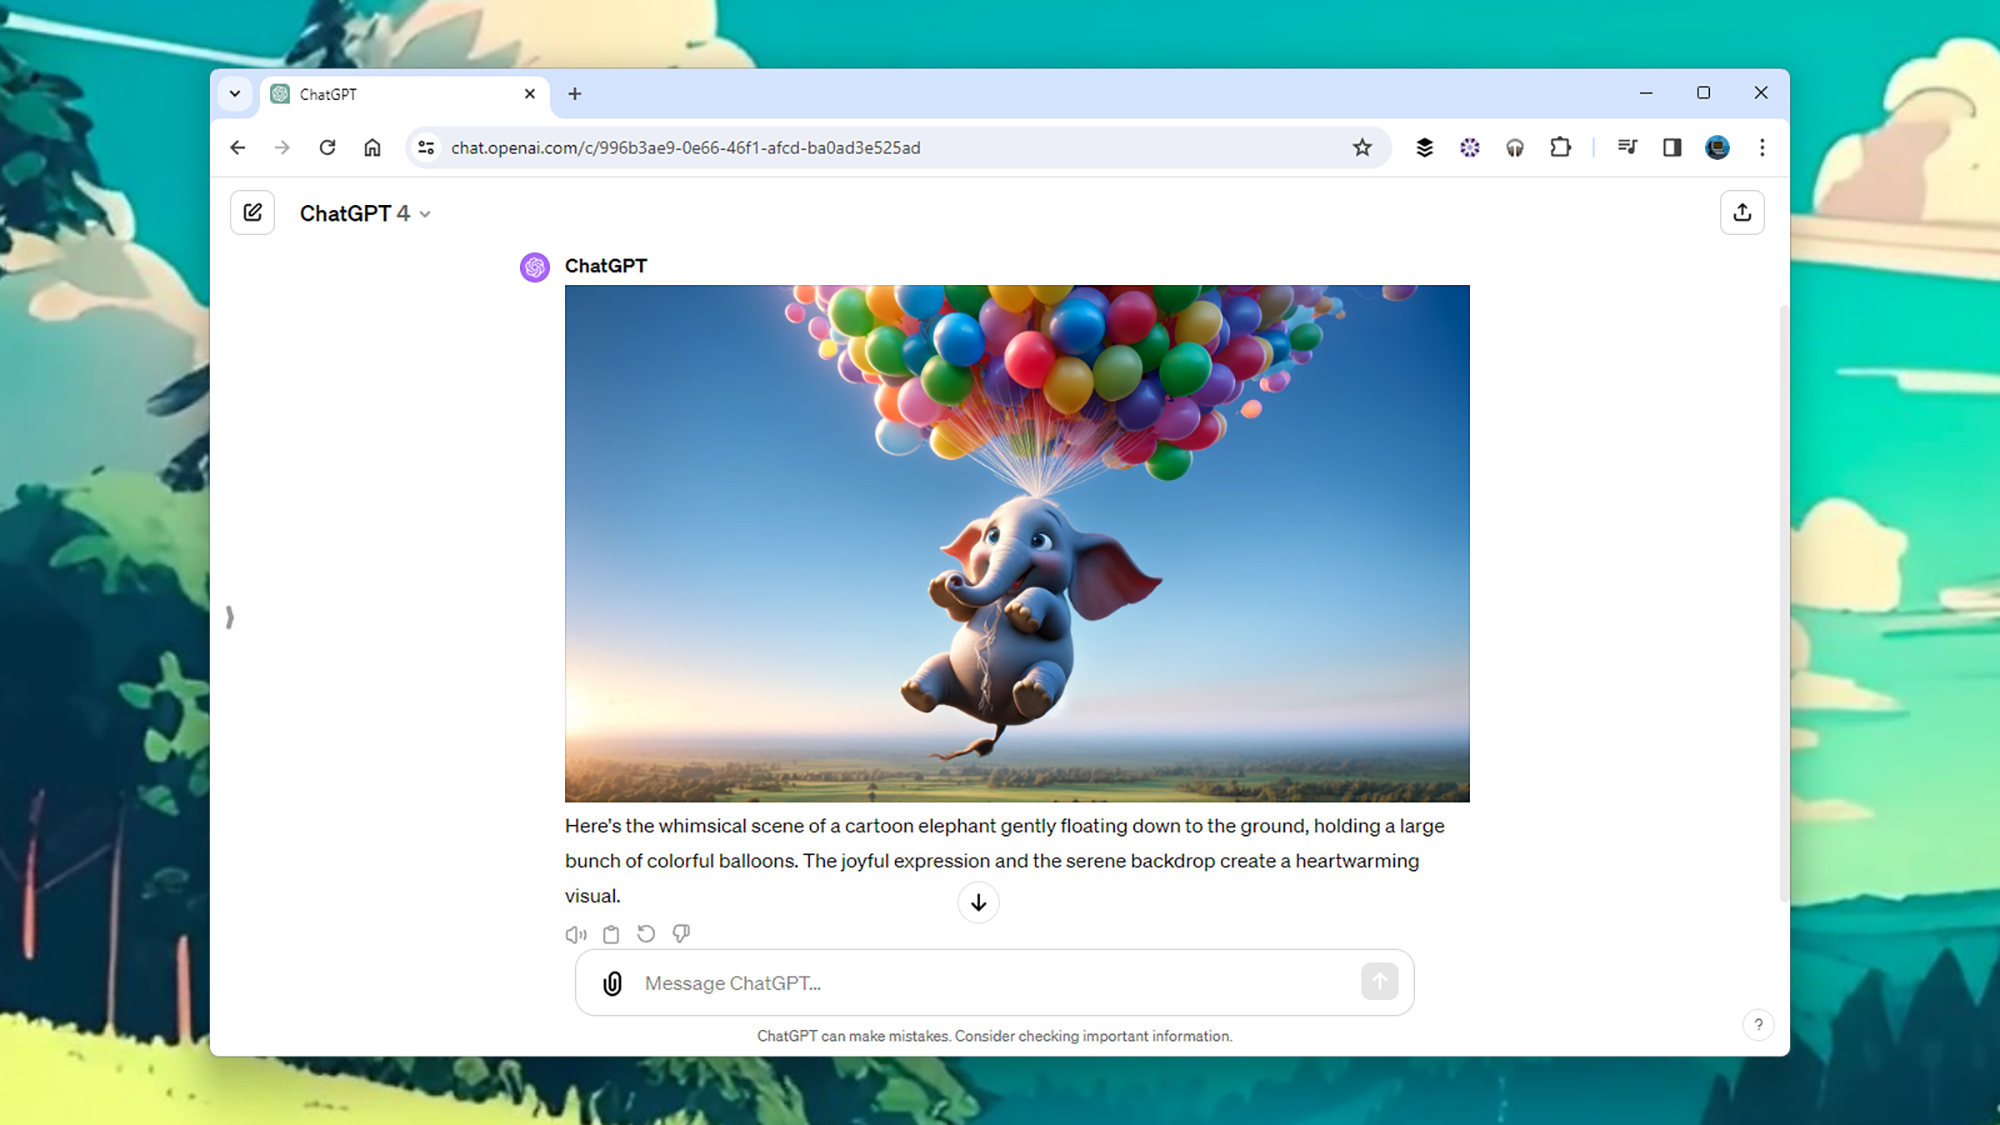 chatgpt screenshot of a cartoon elephant floating under balloons